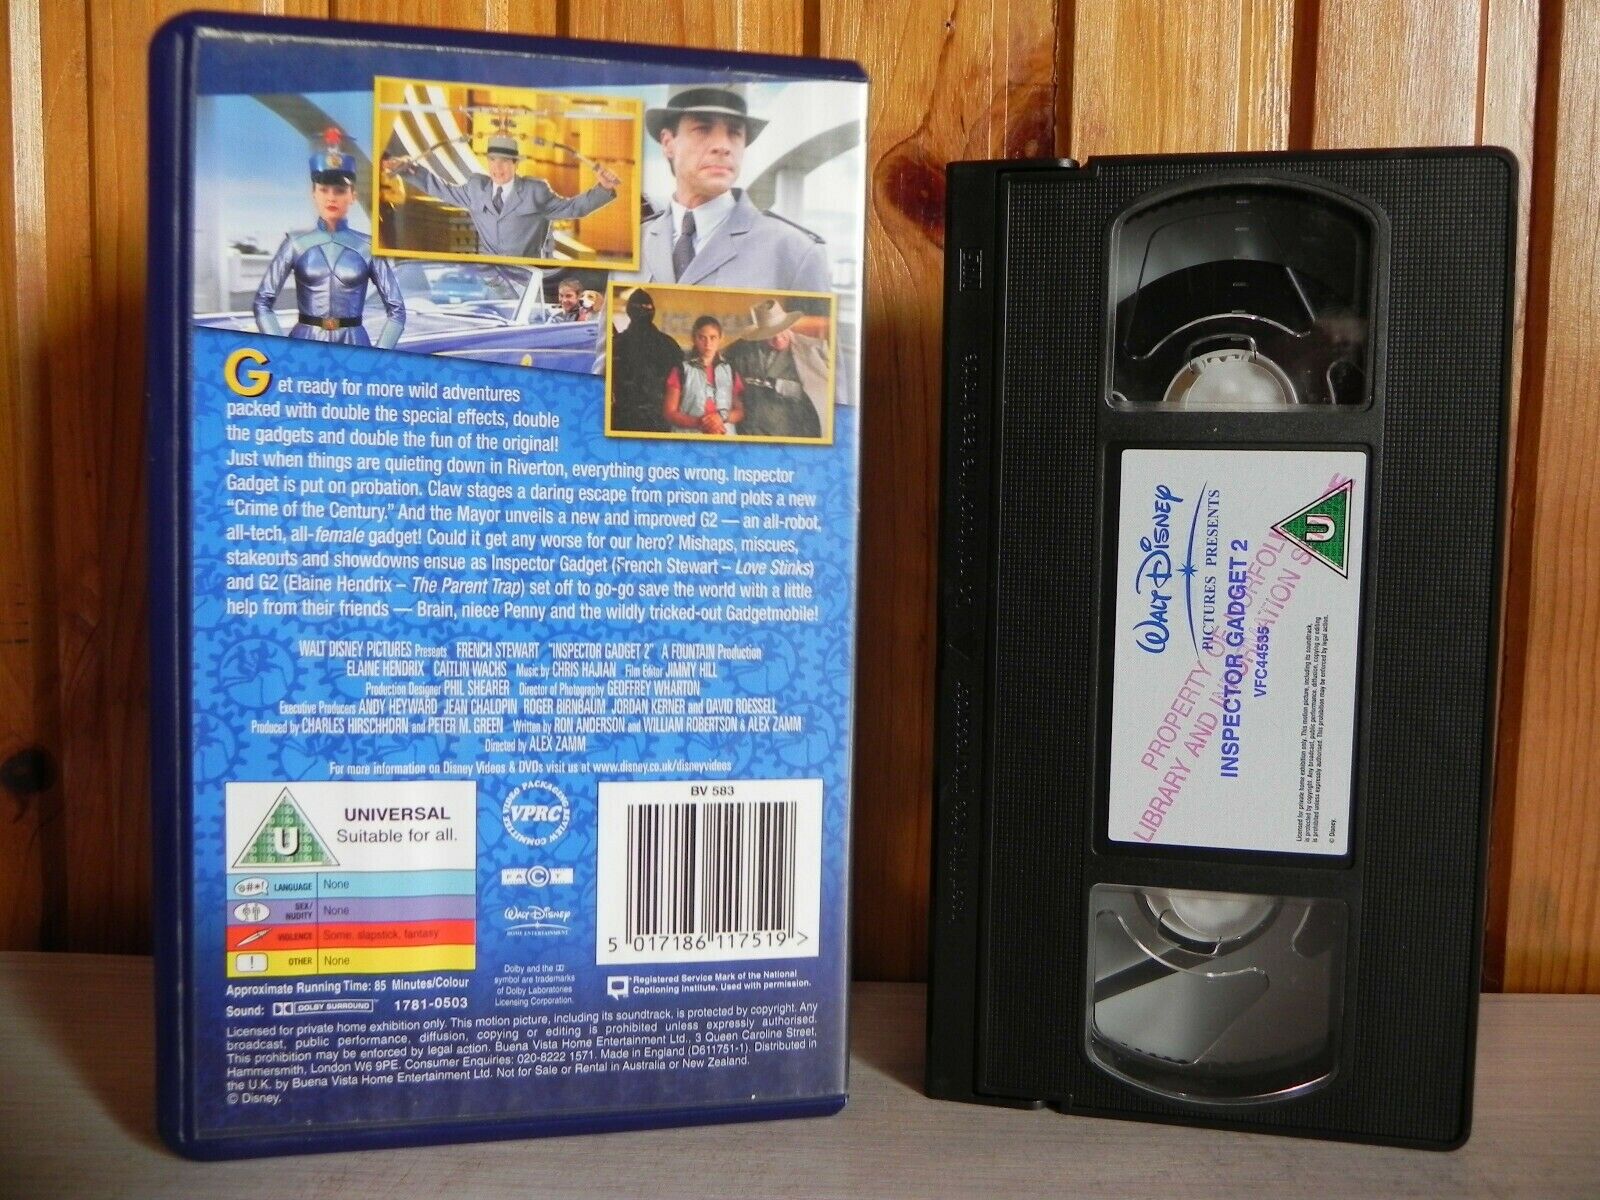 Inspector Gadget 2 - Walt Disney Pictures - Family - Adventure - Kids - Pal VHS-